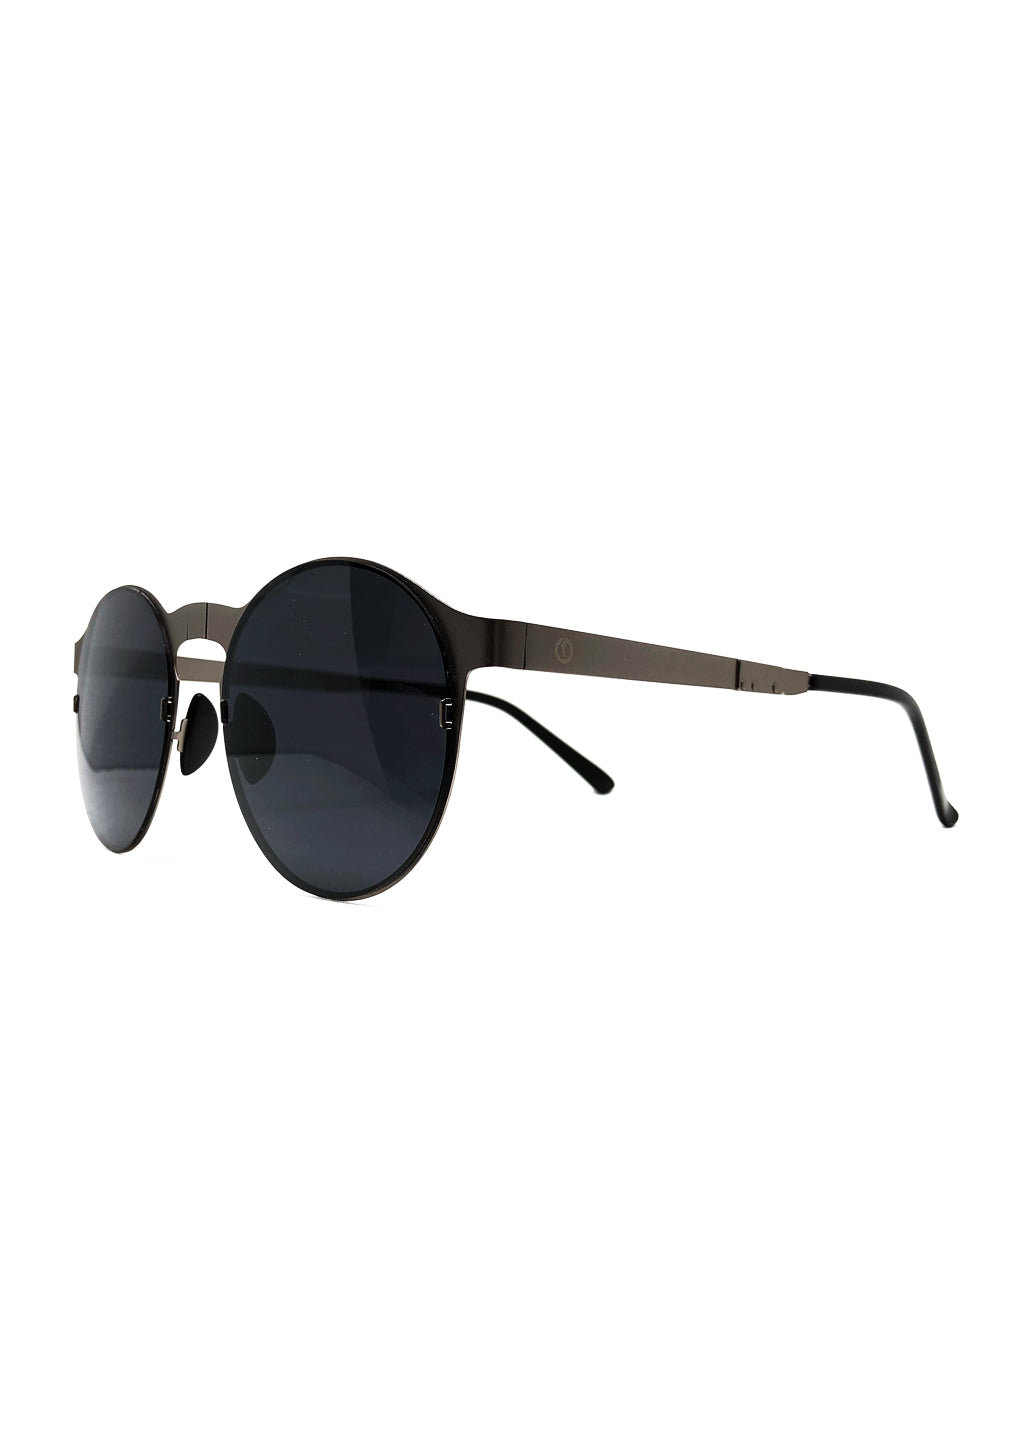 Foldable sunglasses - Looper classic round design - Side photo